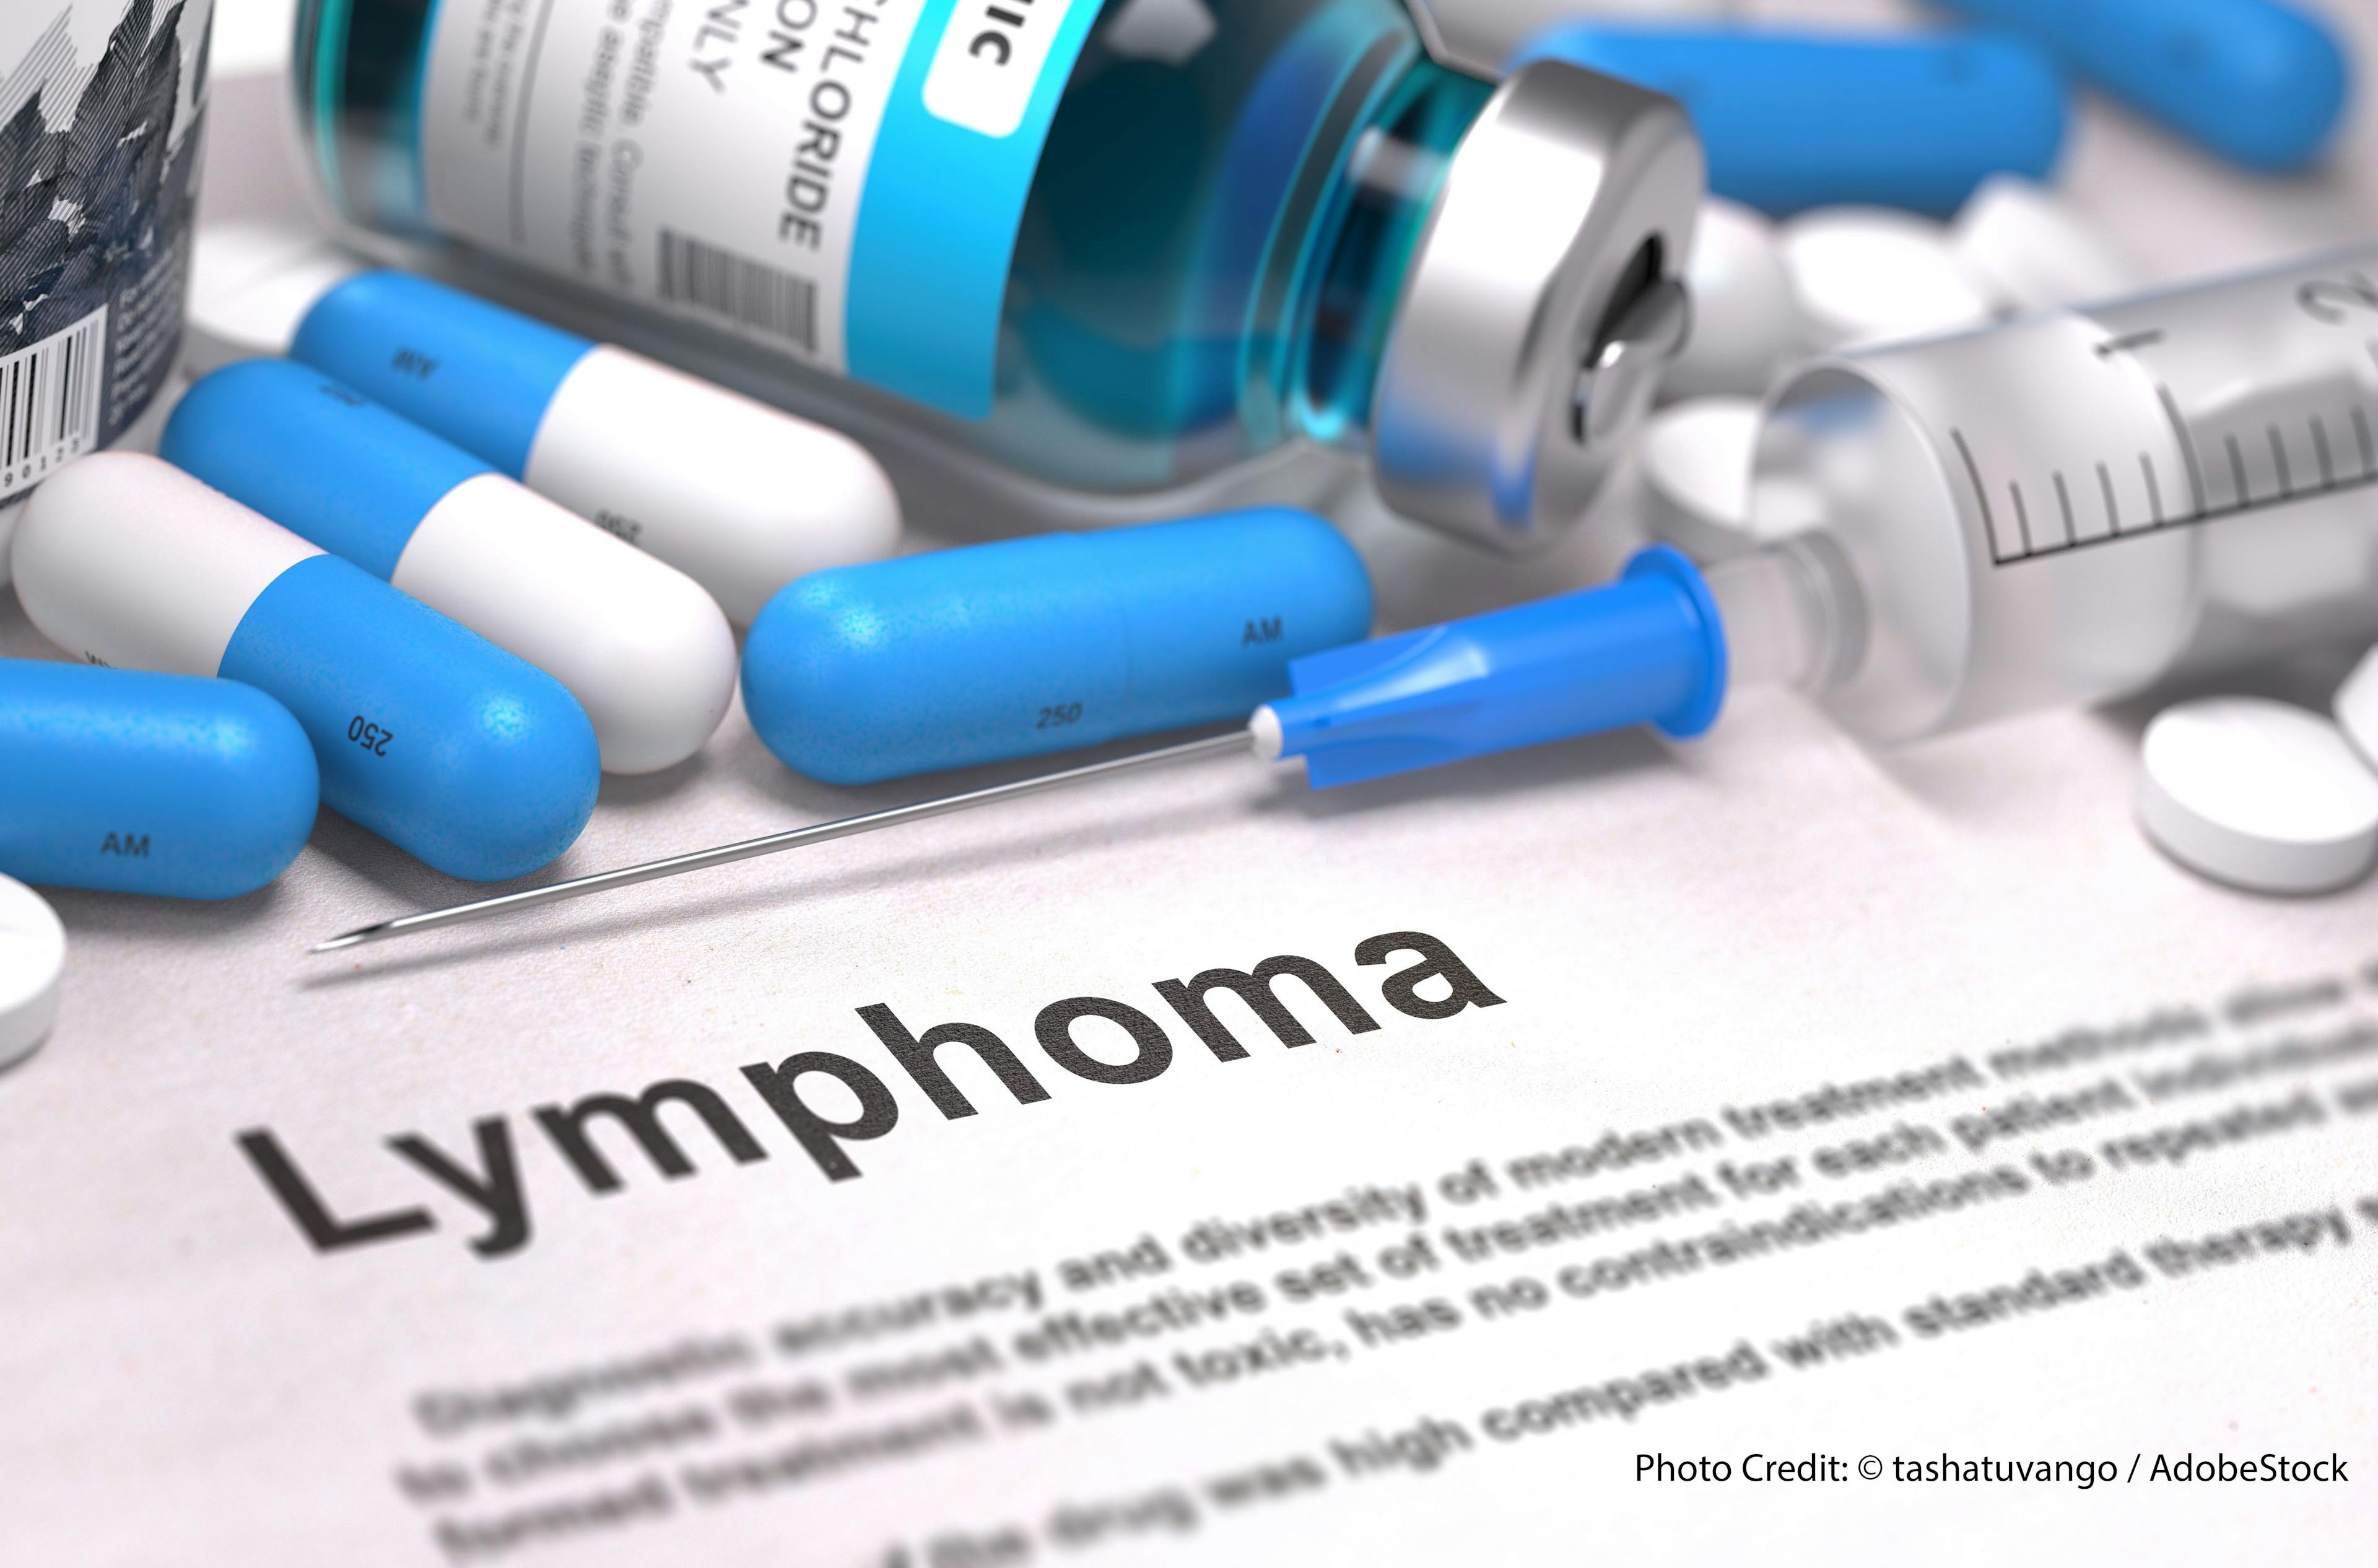 2 years of follow-up confirm zanubrutinib's benefit in marginal zone lymphoma